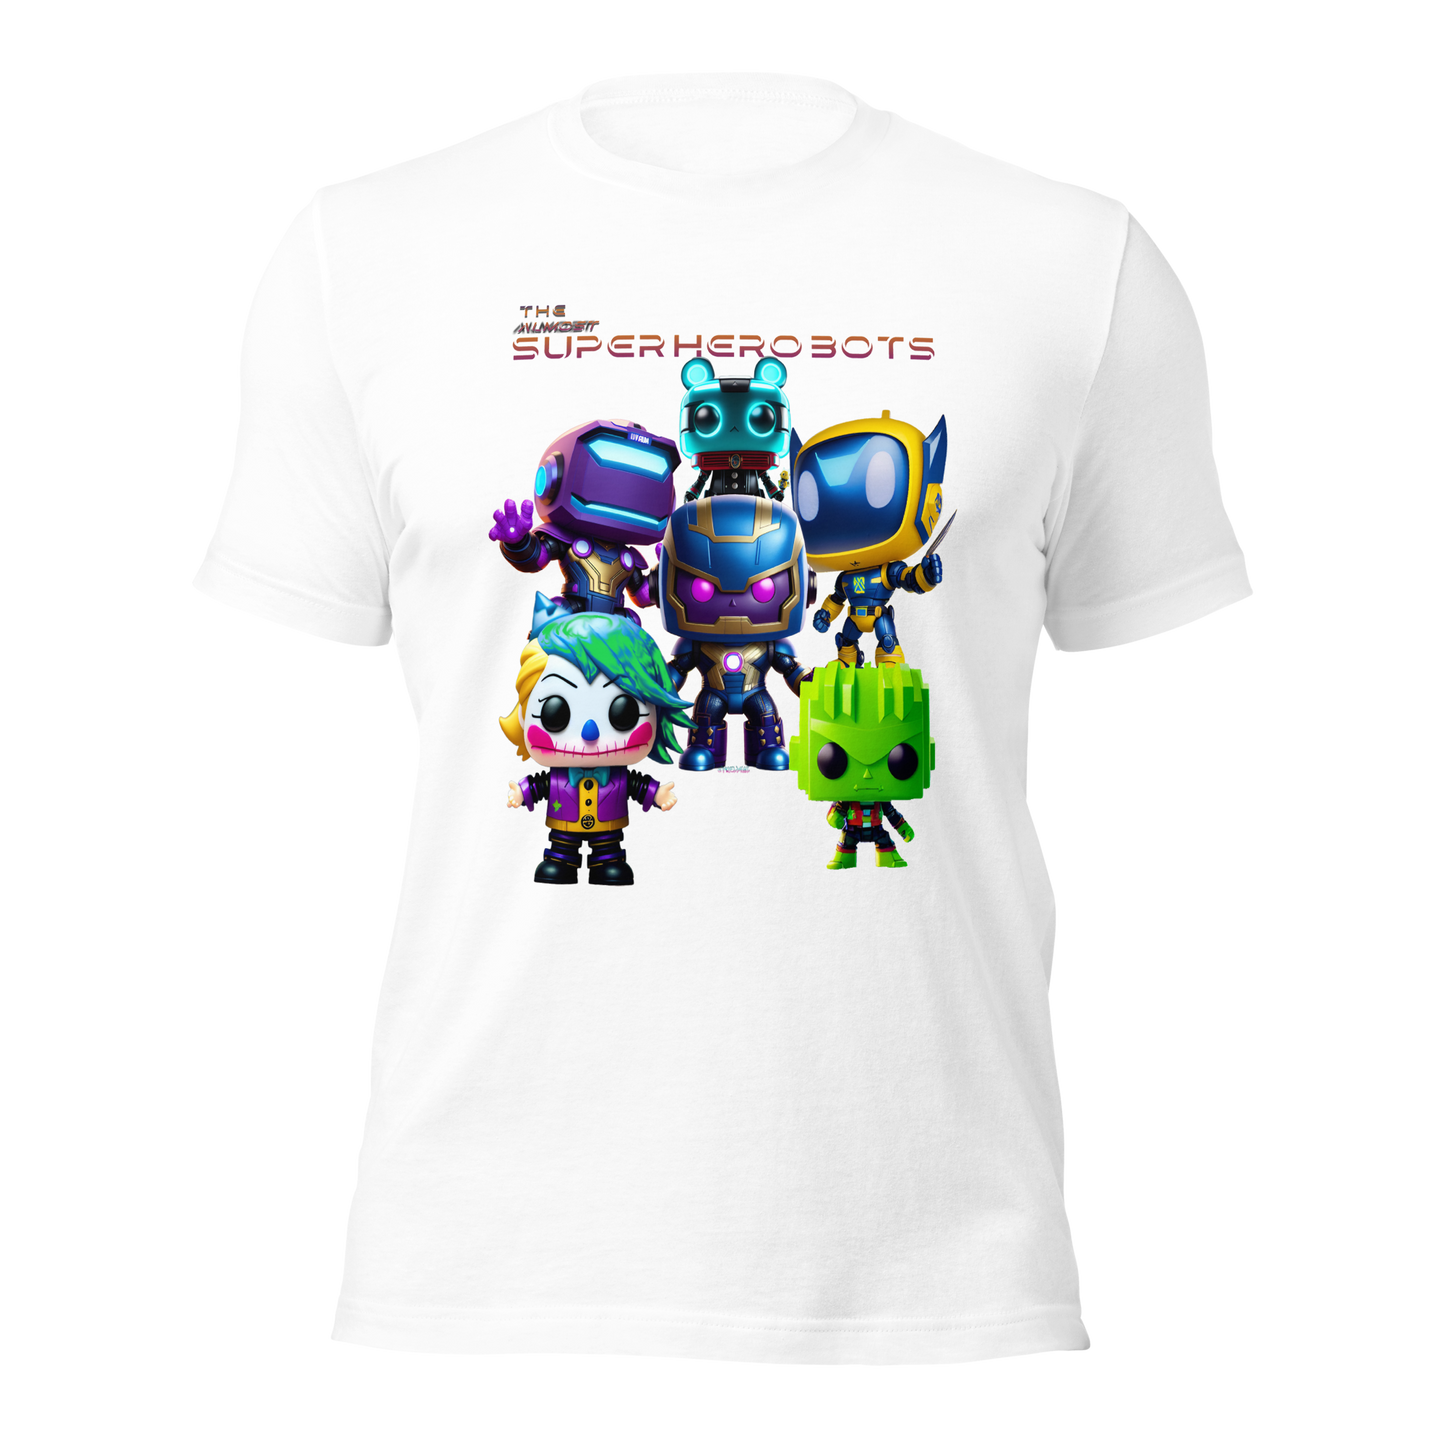 The Almost SuperHero Bots from PixelDust T-Shirt